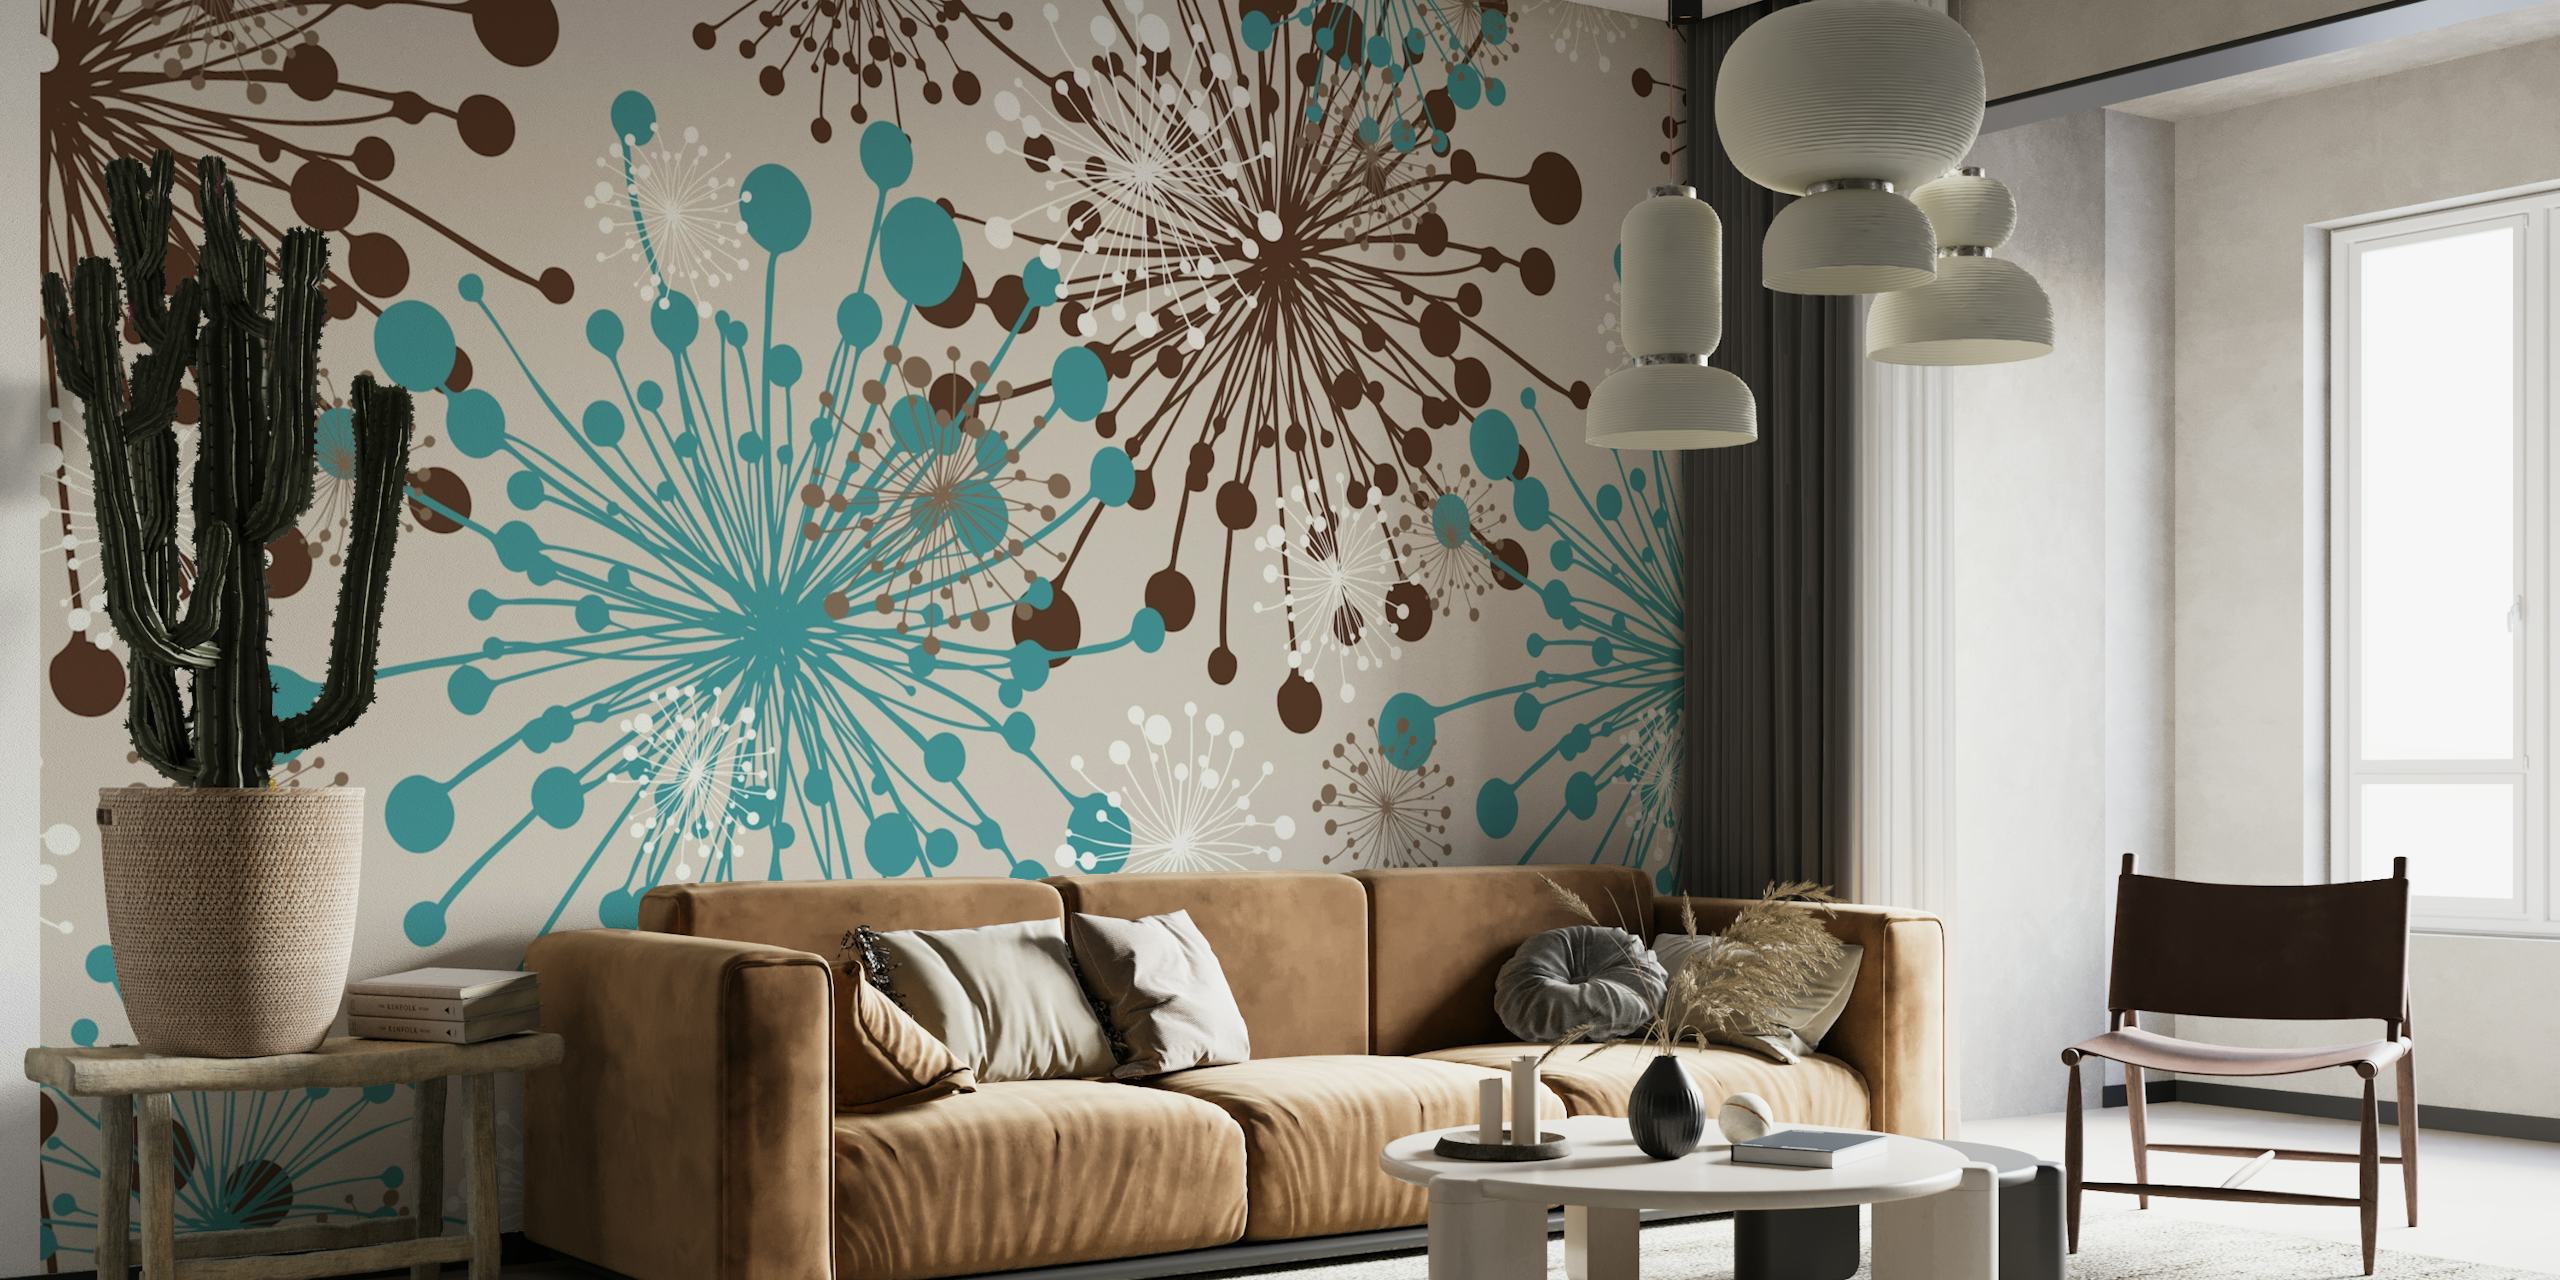 Dandelions grey teal brown wallpaper